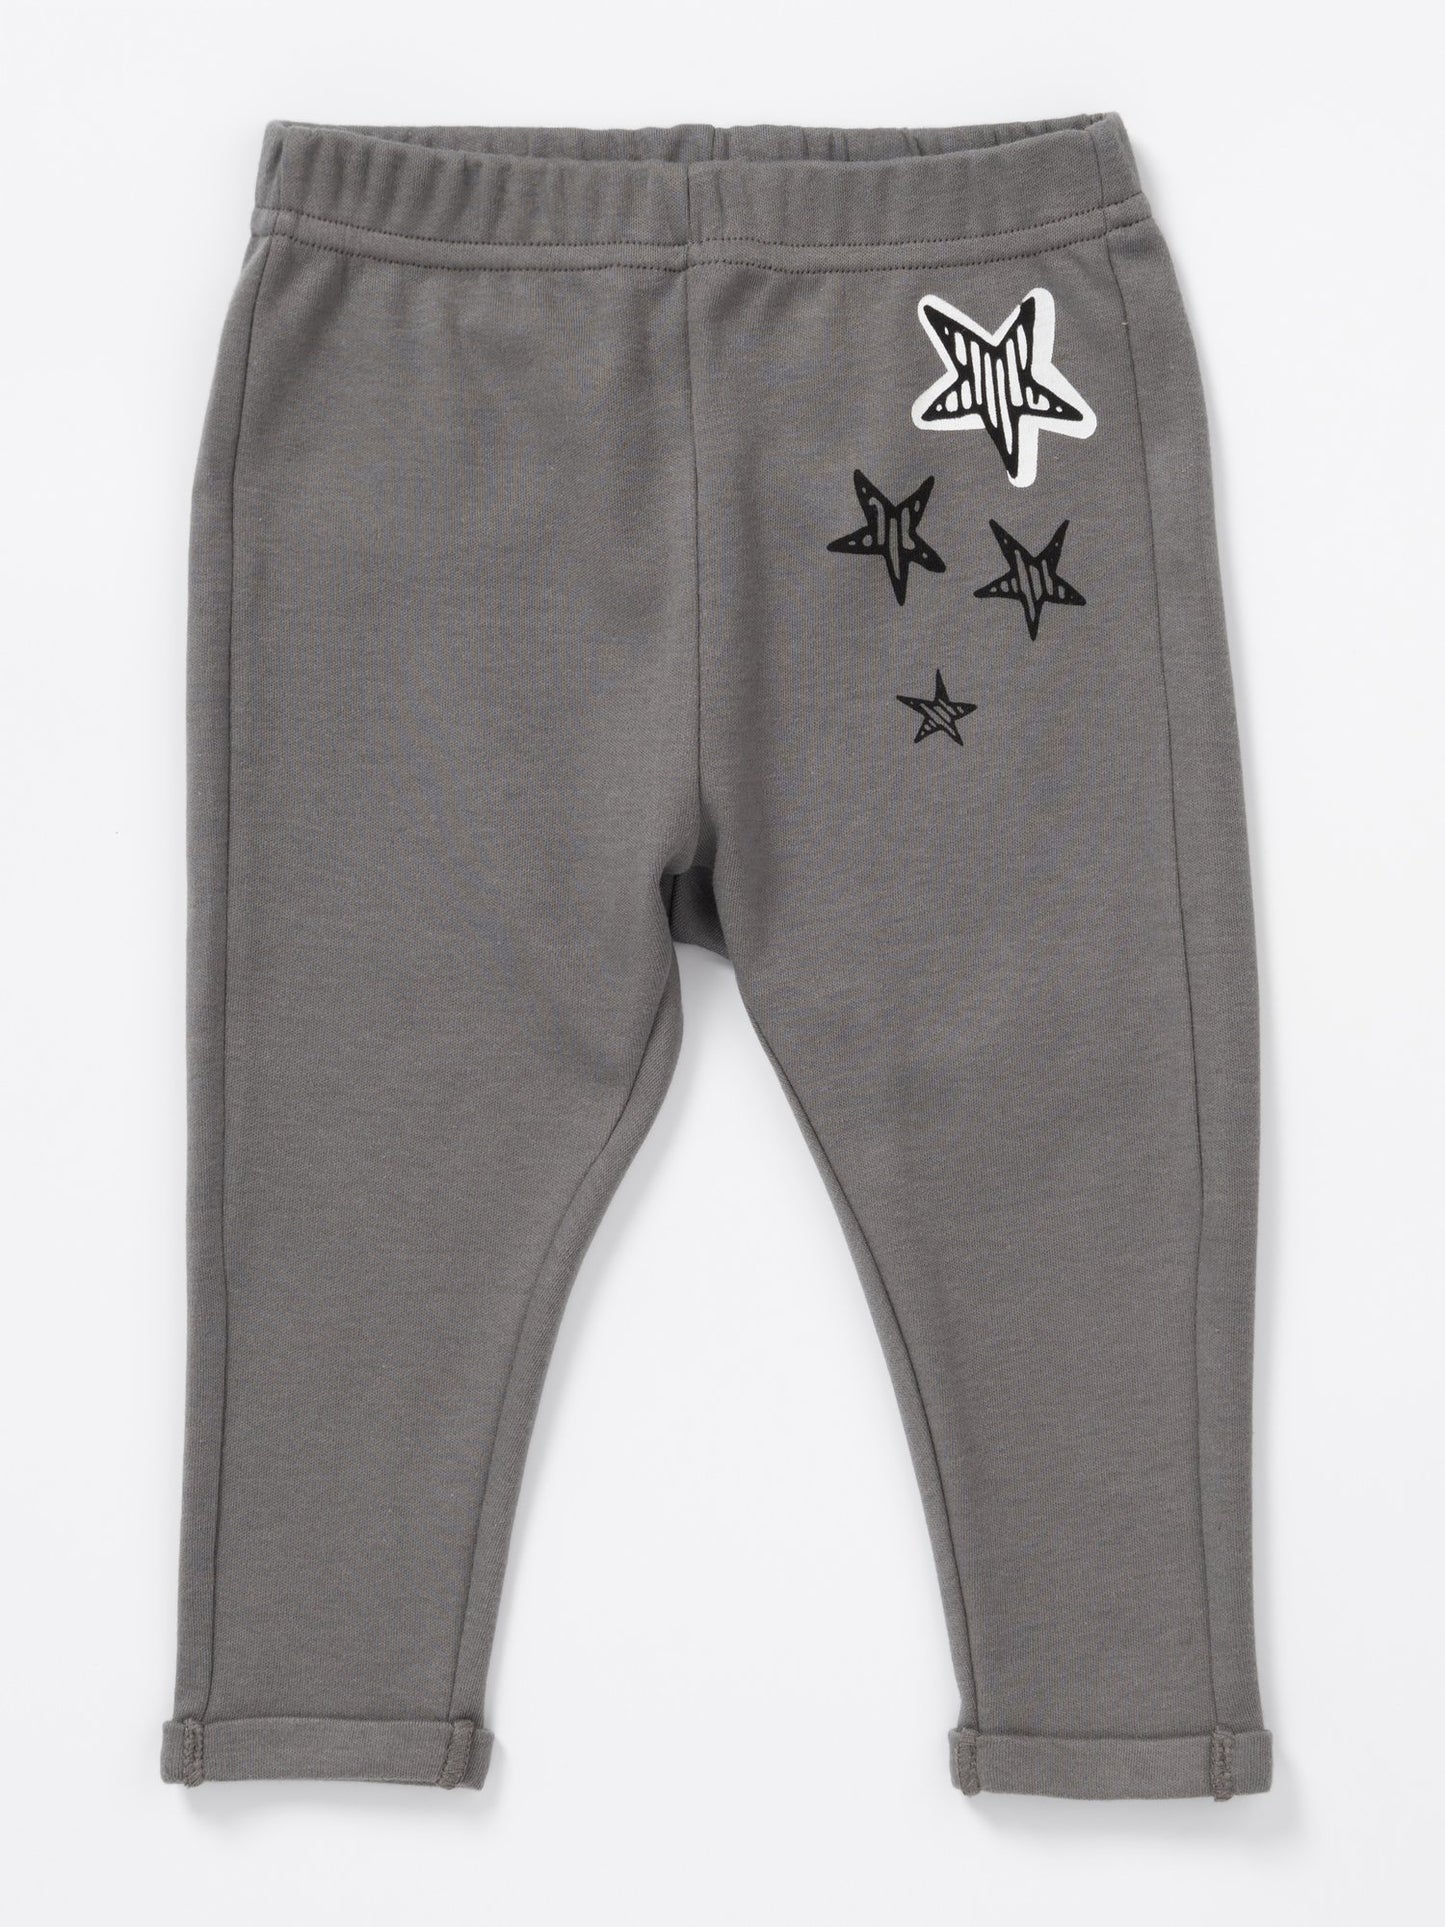 Artie - Kids Grey Leggings with Star Design 6 to 24 Months - Stylemykid.com